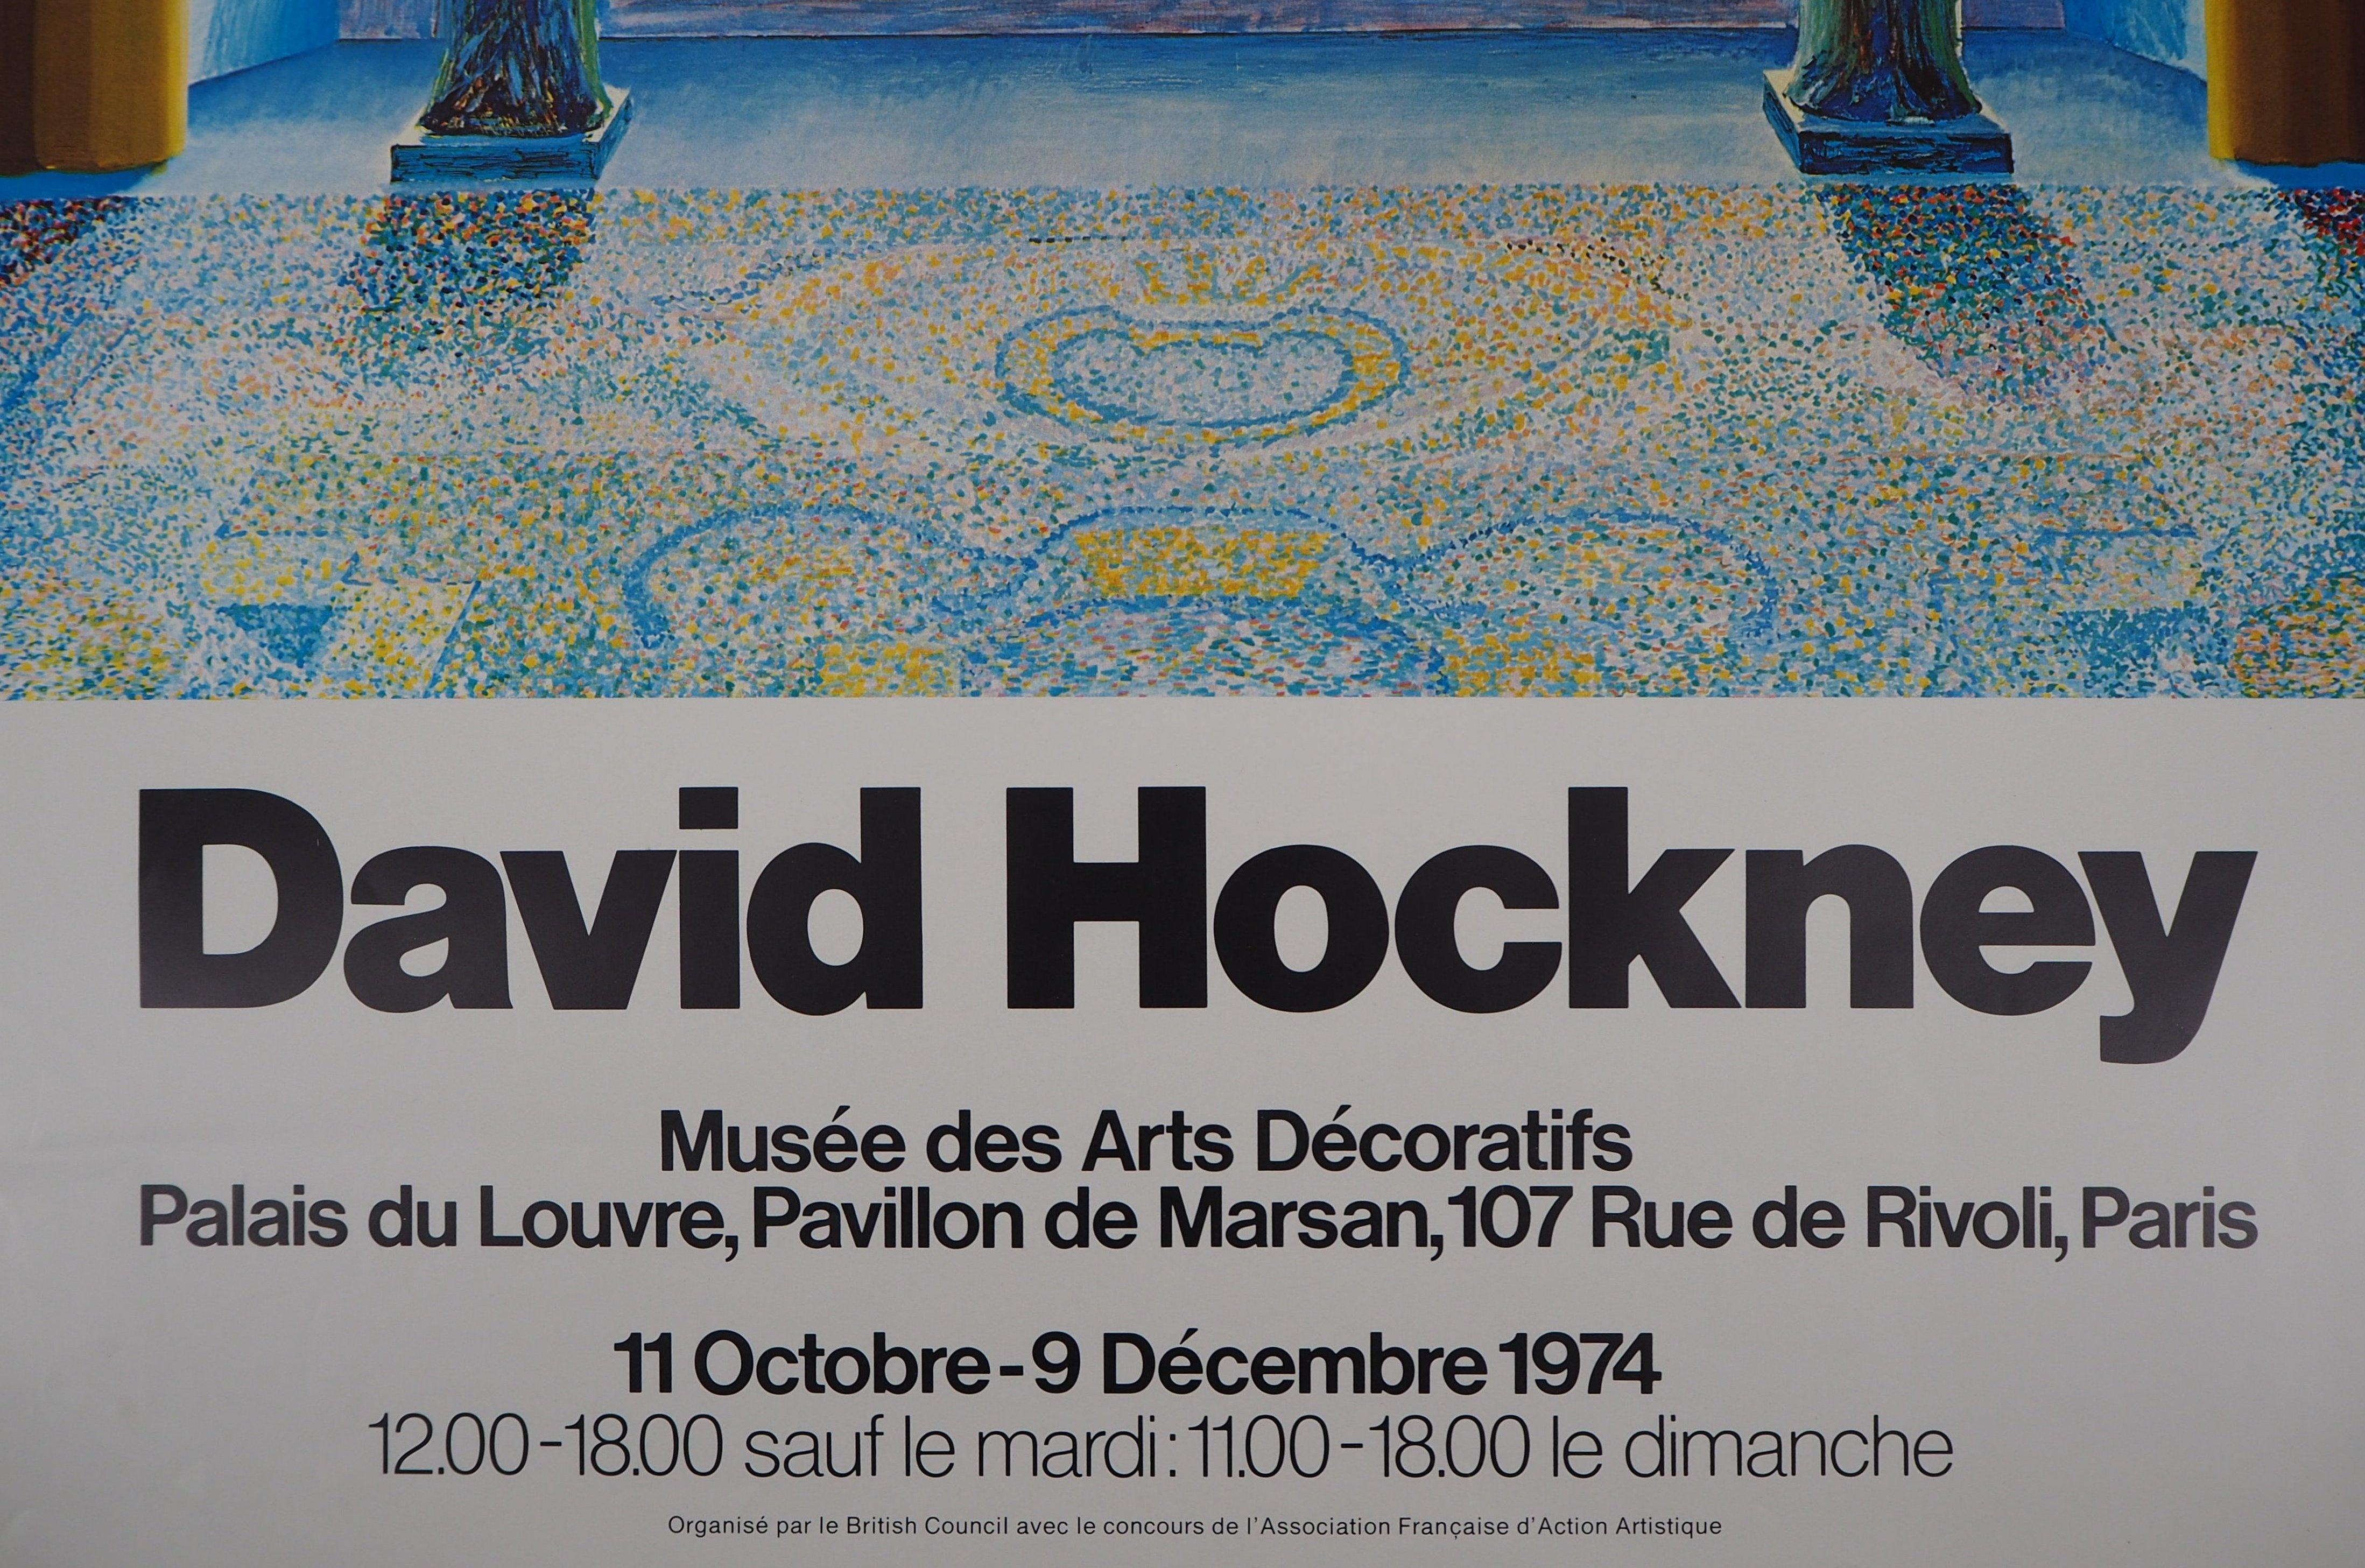 David Hockney at Louvre Museum (Paris) - Original Vintage Poster - American Modern Print by (after) David Hockney